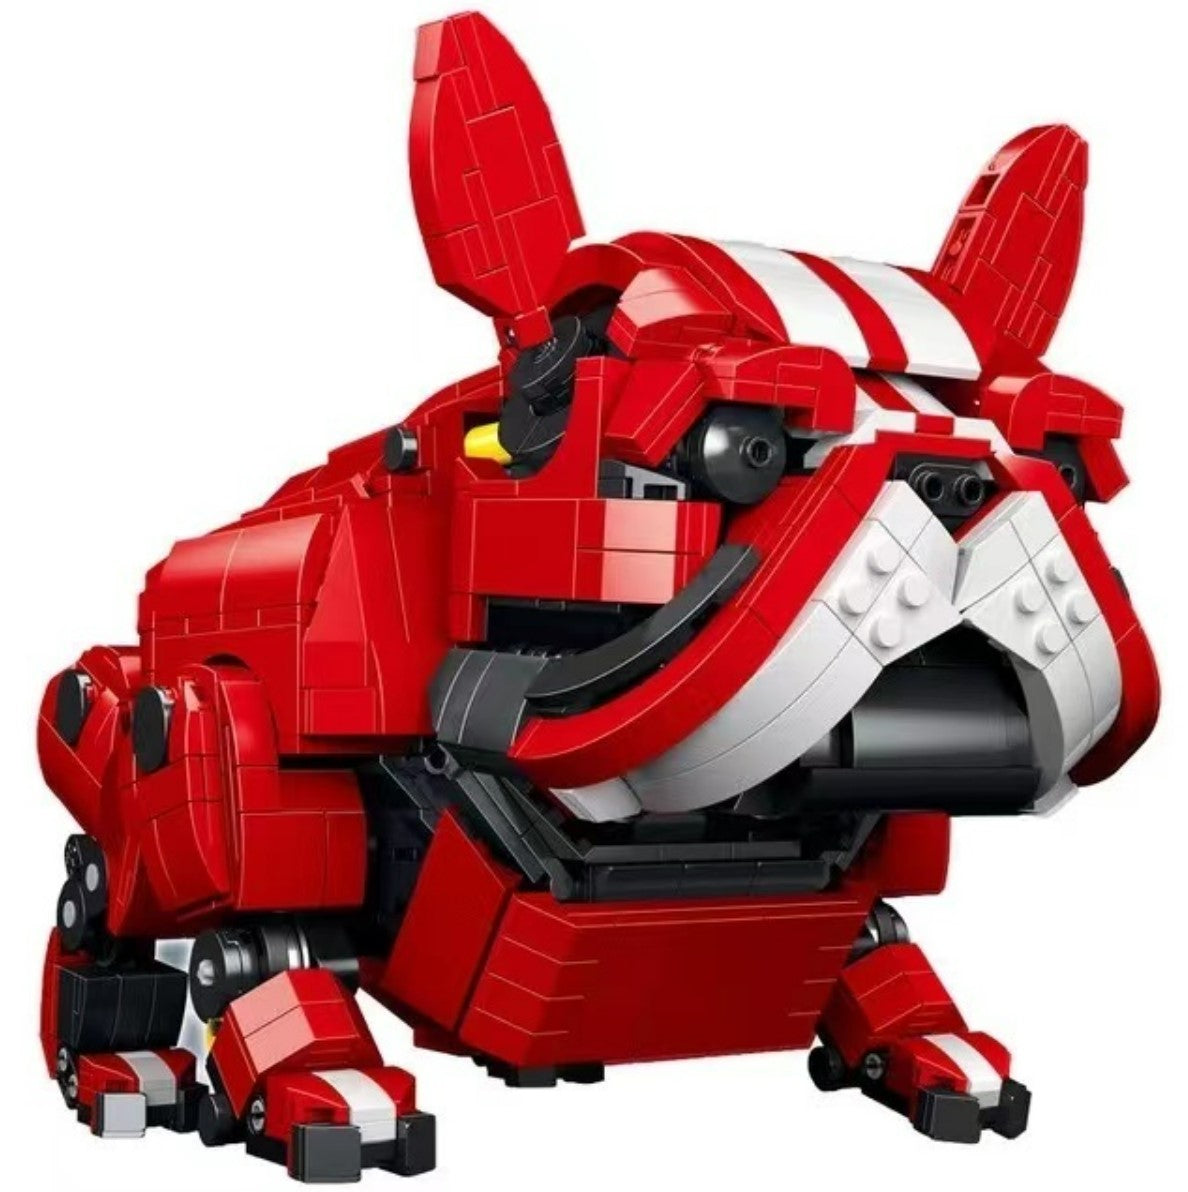 DK rote, mechanische Bulldogge Klemmbaustein Set